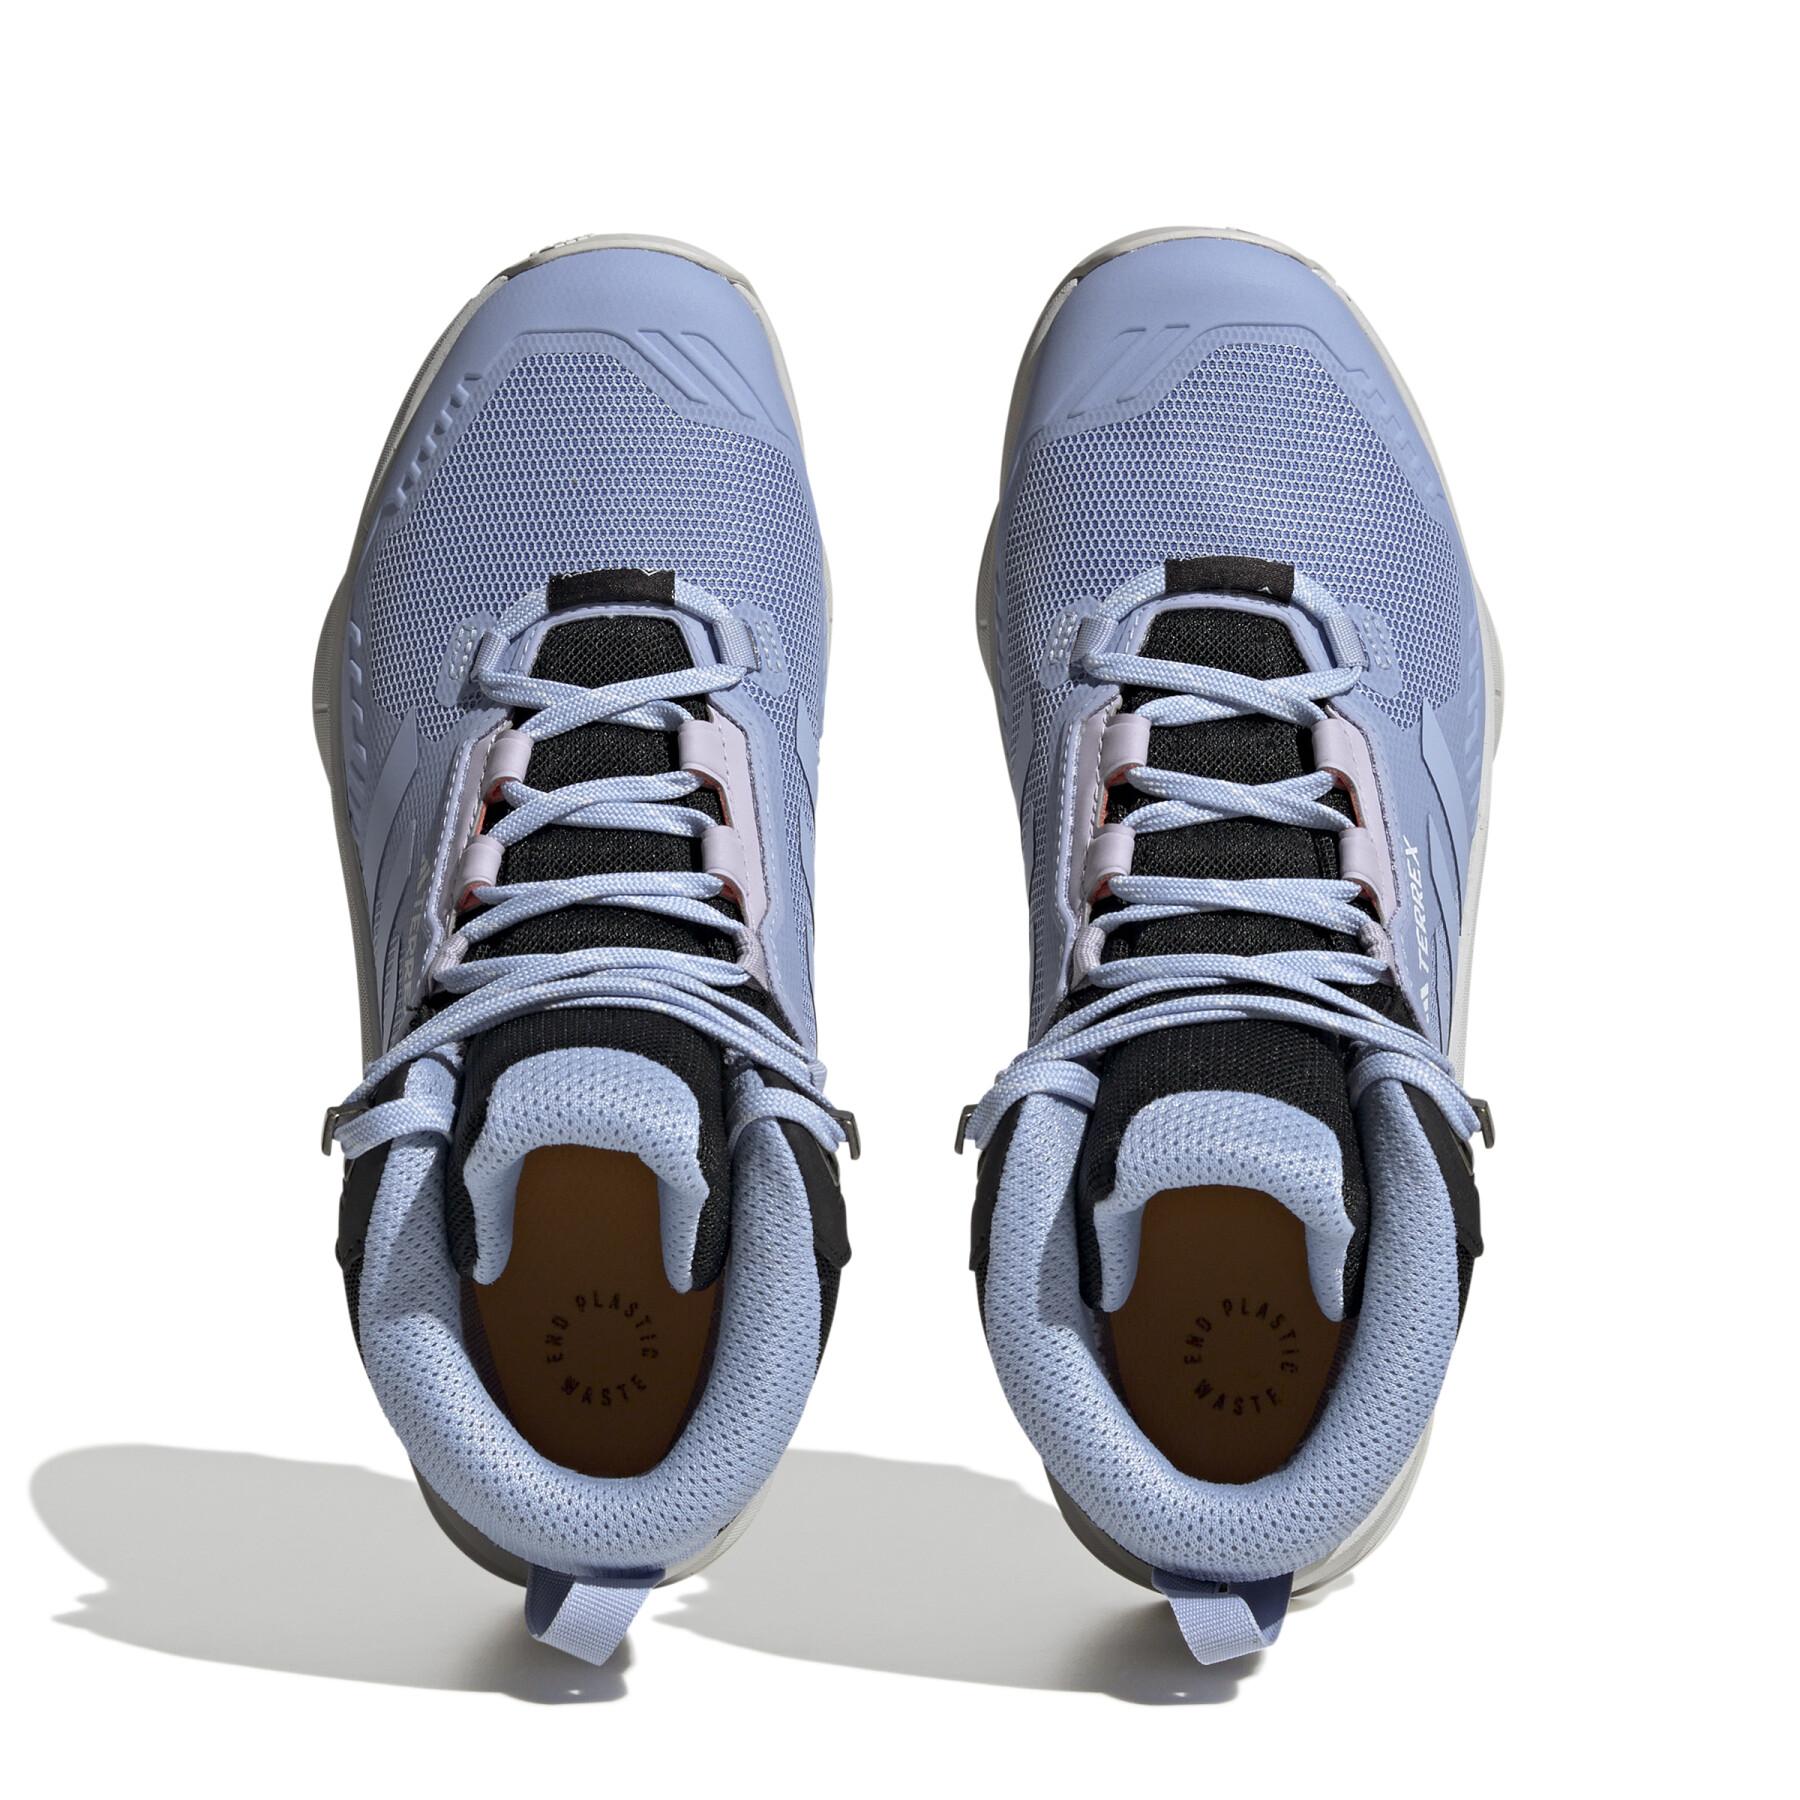 Chaussures de randonnée femme adidas Terrex Swift R3 Mid GORE-TEX